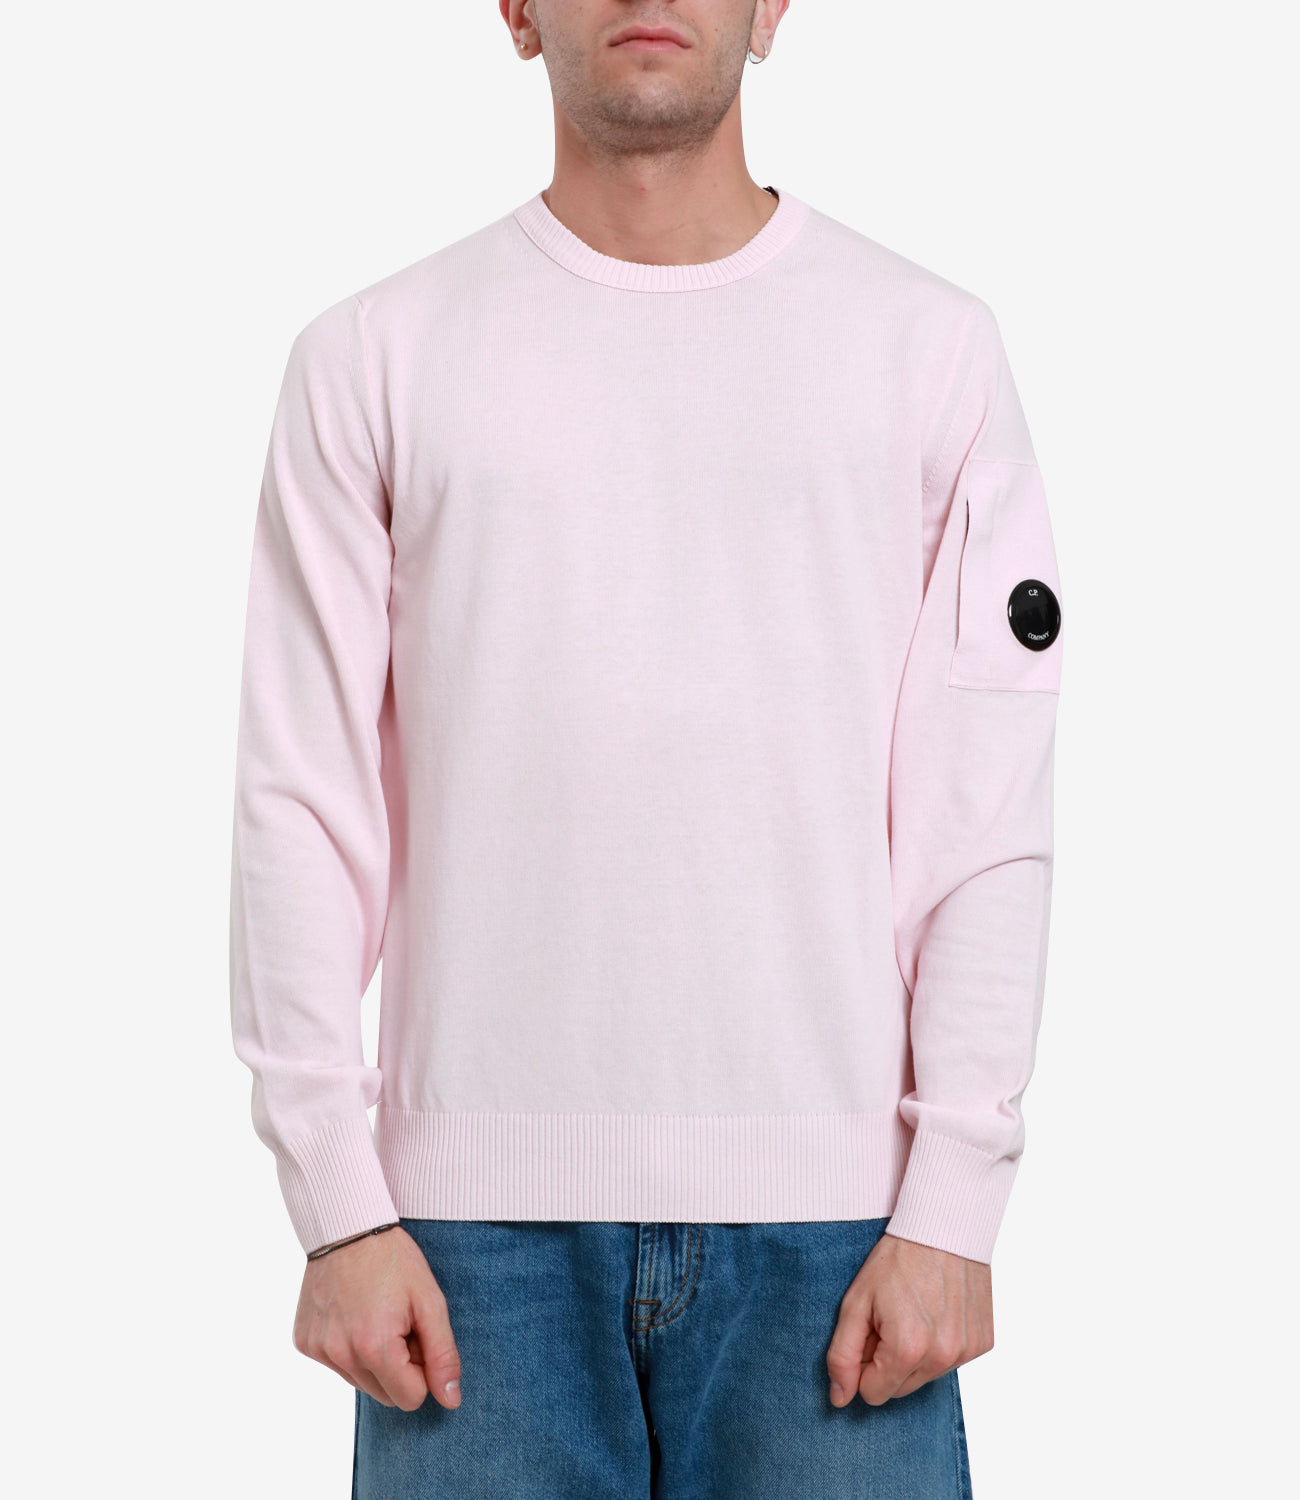 C.P. Company | Pink Jersey